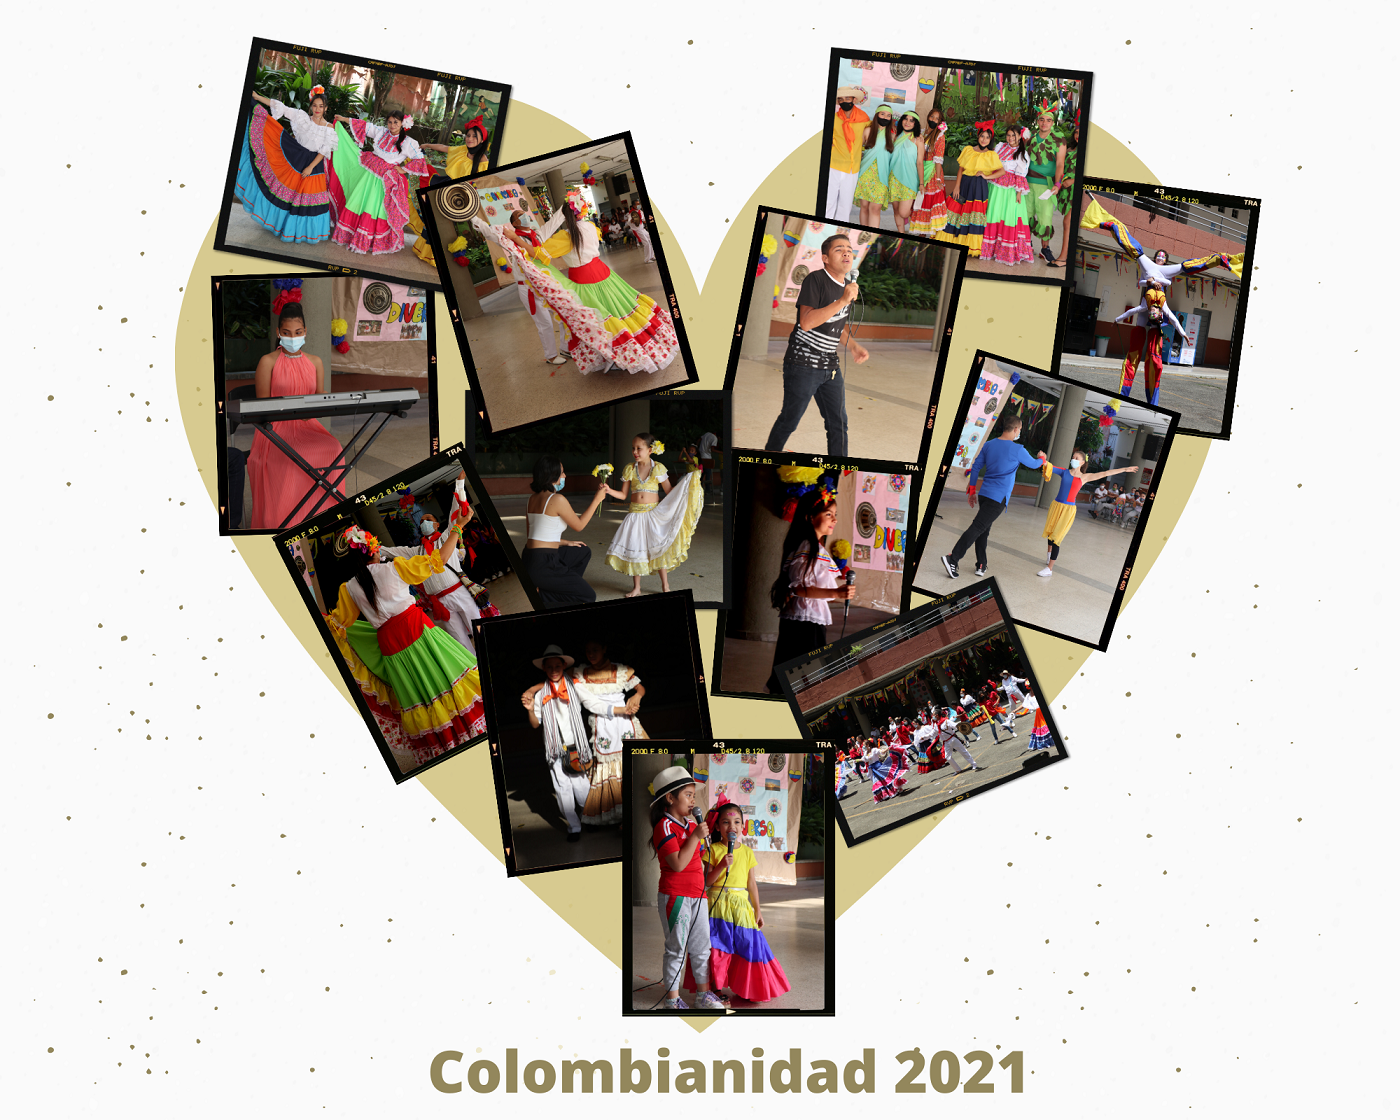 Colombianidad 2021